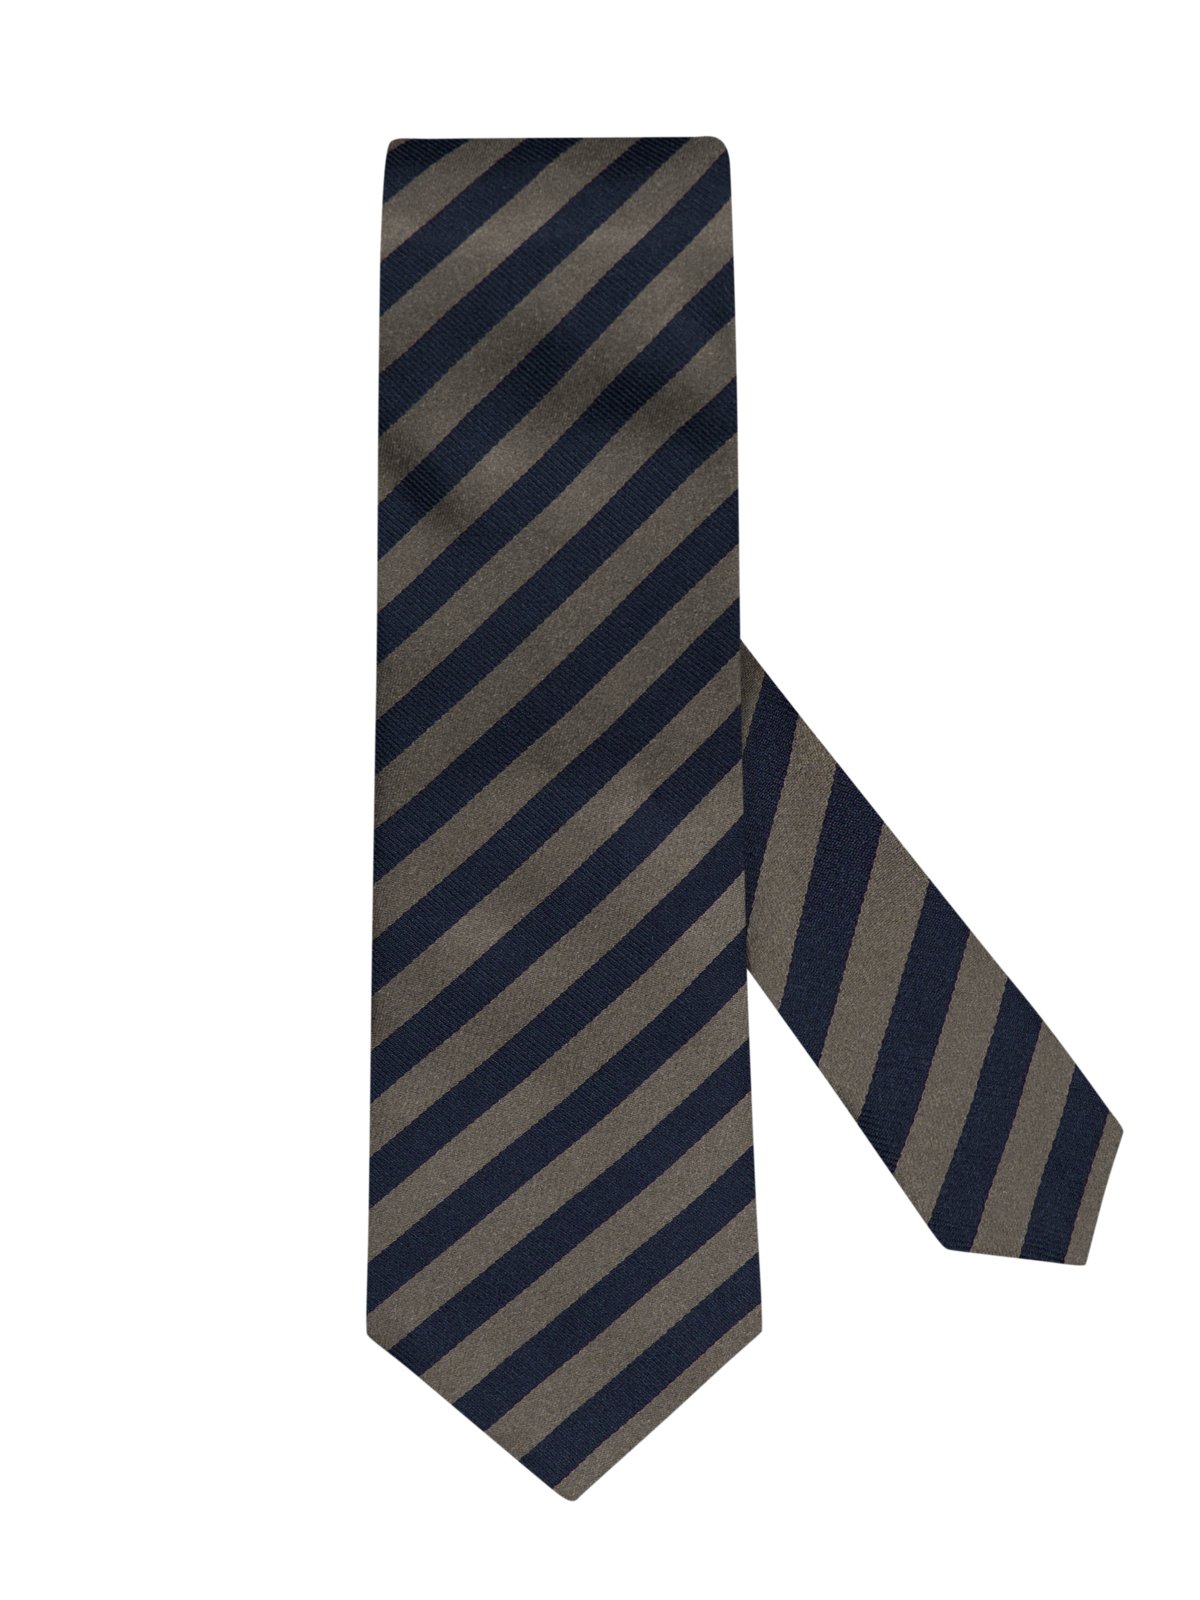 J. Ploenes Krawatte mit Streifen-Muster